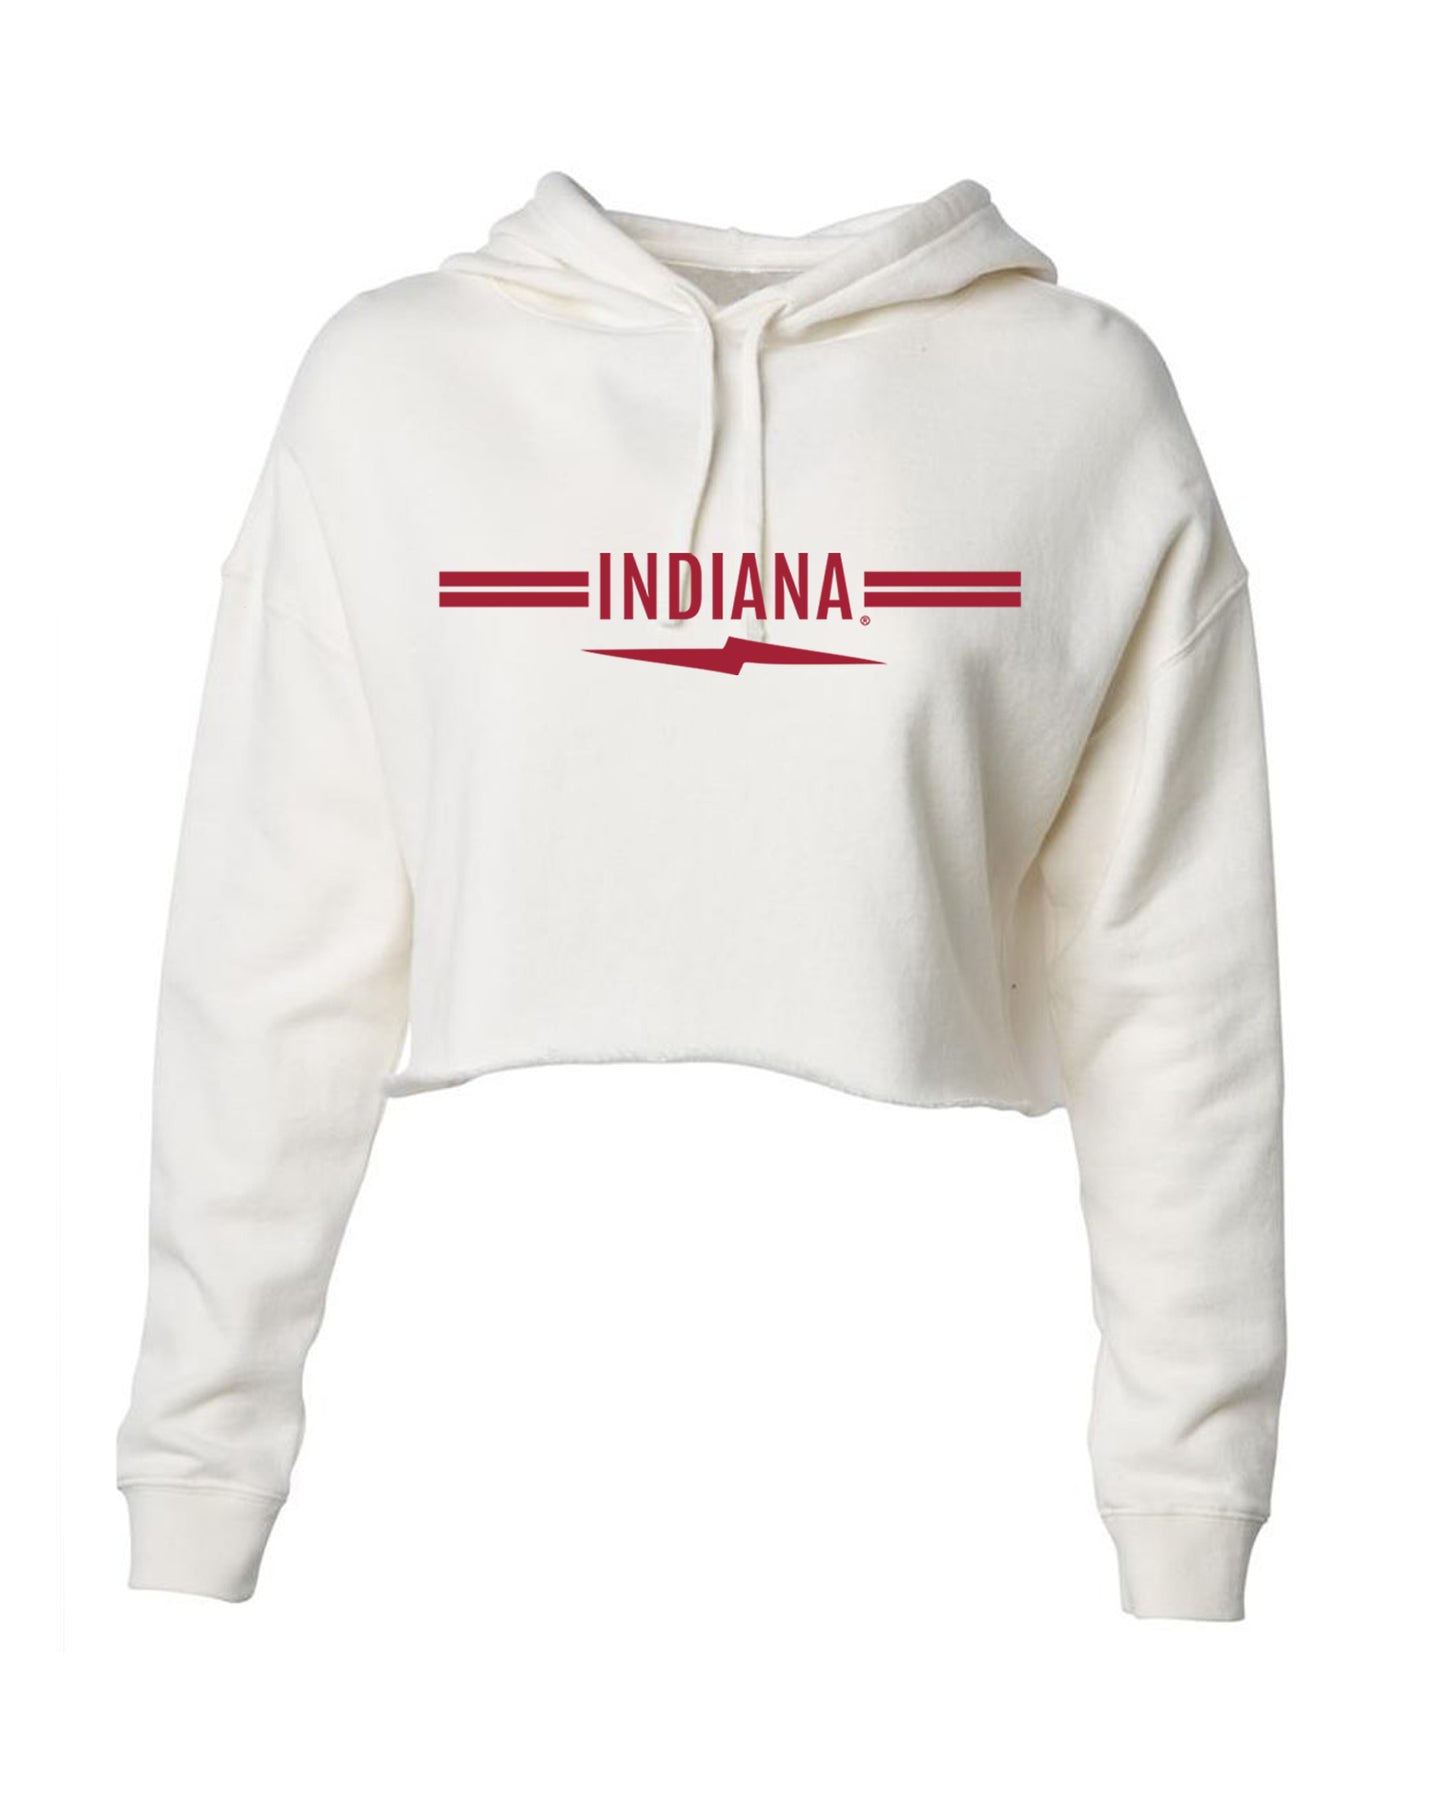 Indiana Lightning Bolt Stripe Cream Sweatshirt